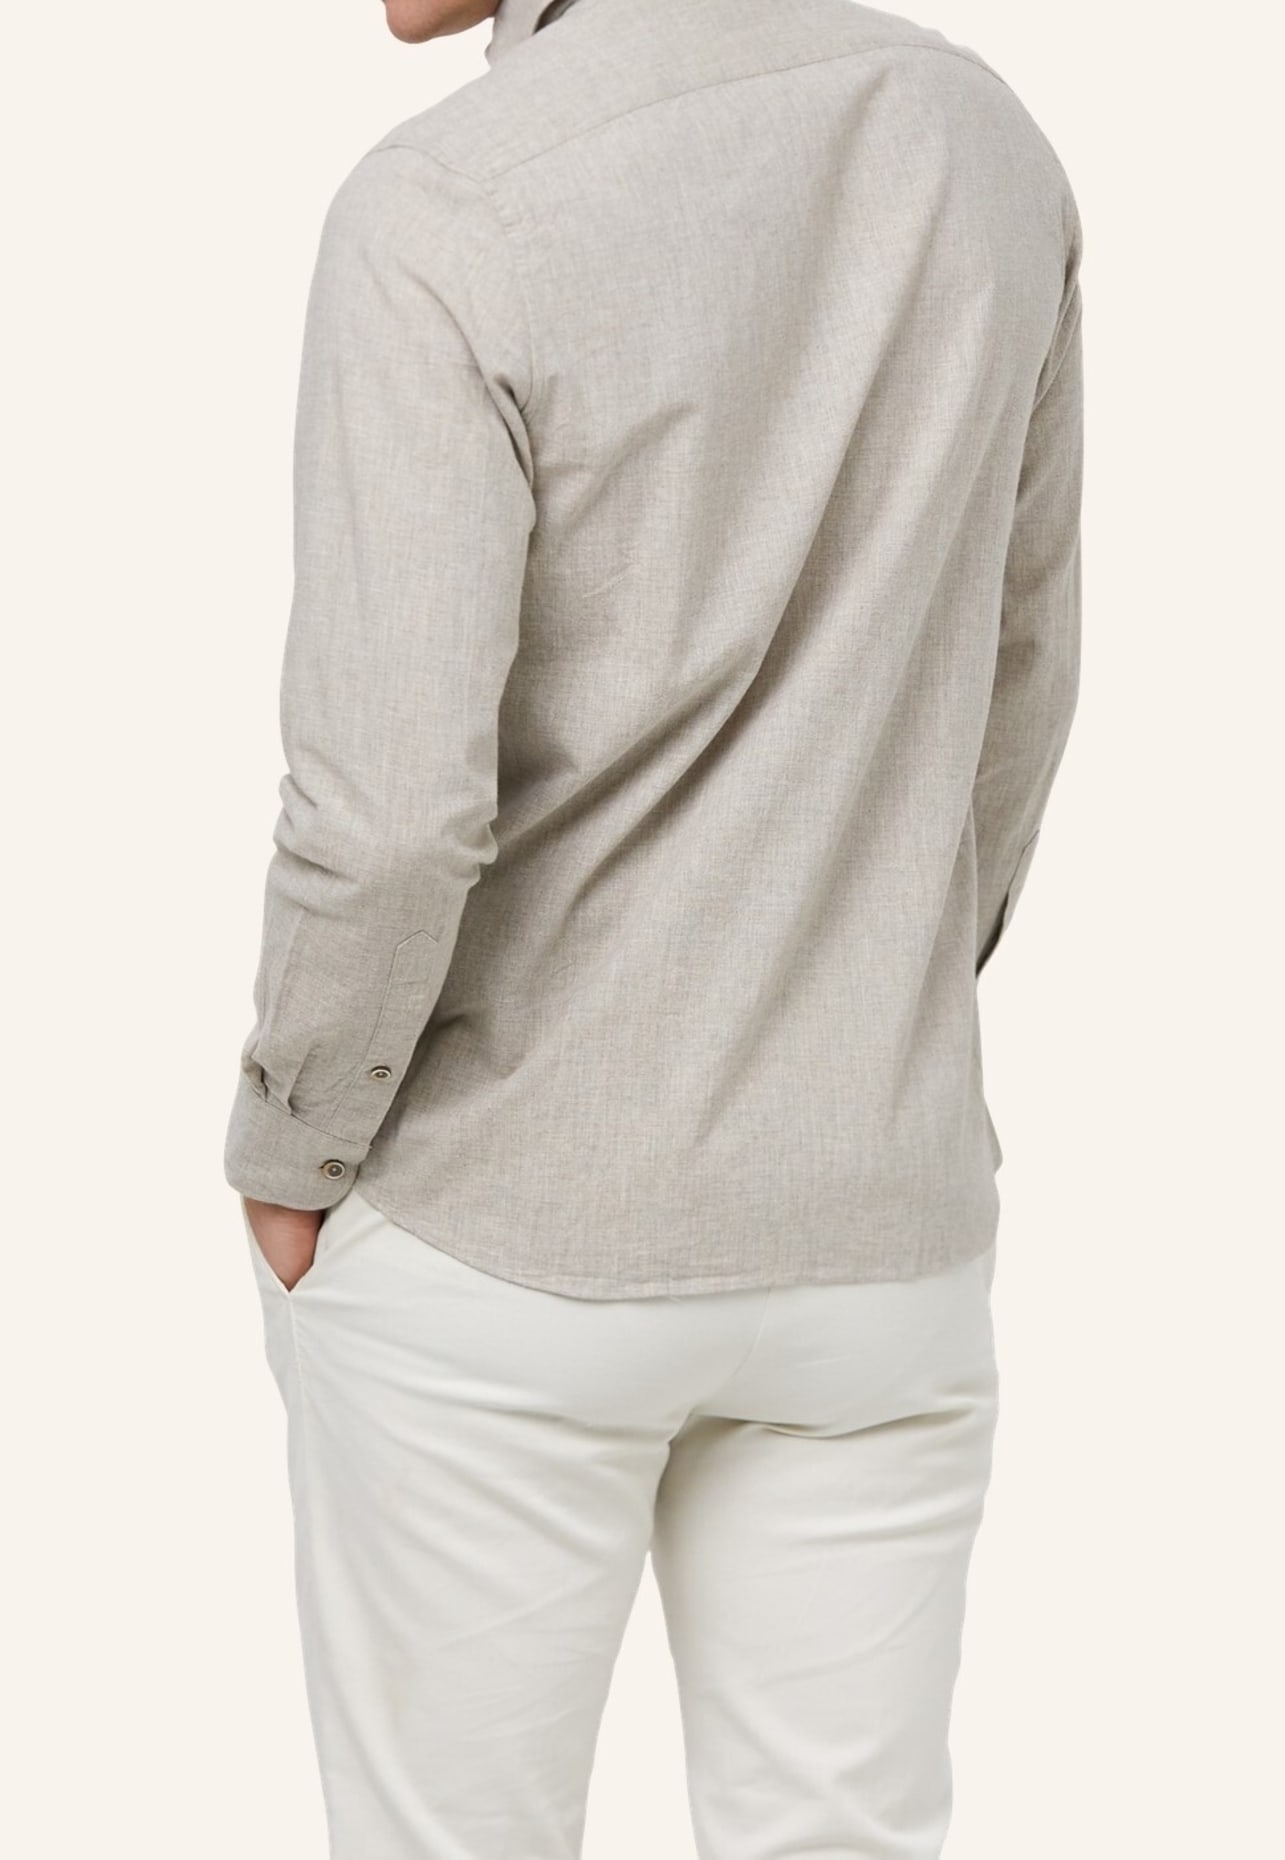 PROFUOMO Hemd Slim Fit, Farbe: BEIGE/ CREME/ NUDE/ WEISS/ TAUPE (Bild 2)